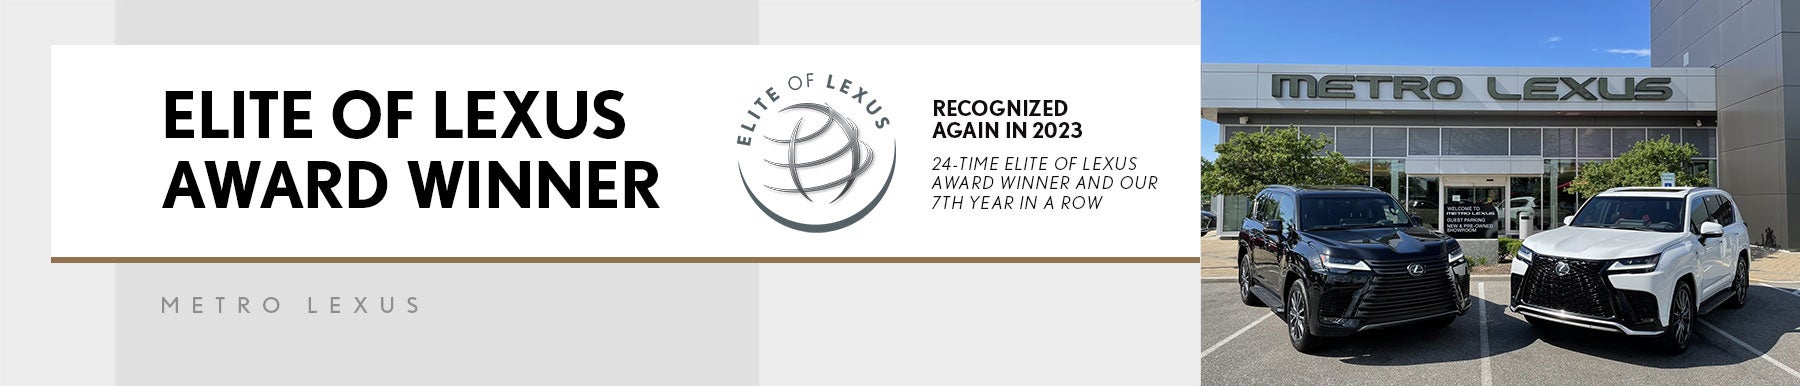 Elite of Lexus Award - Metro Lexus